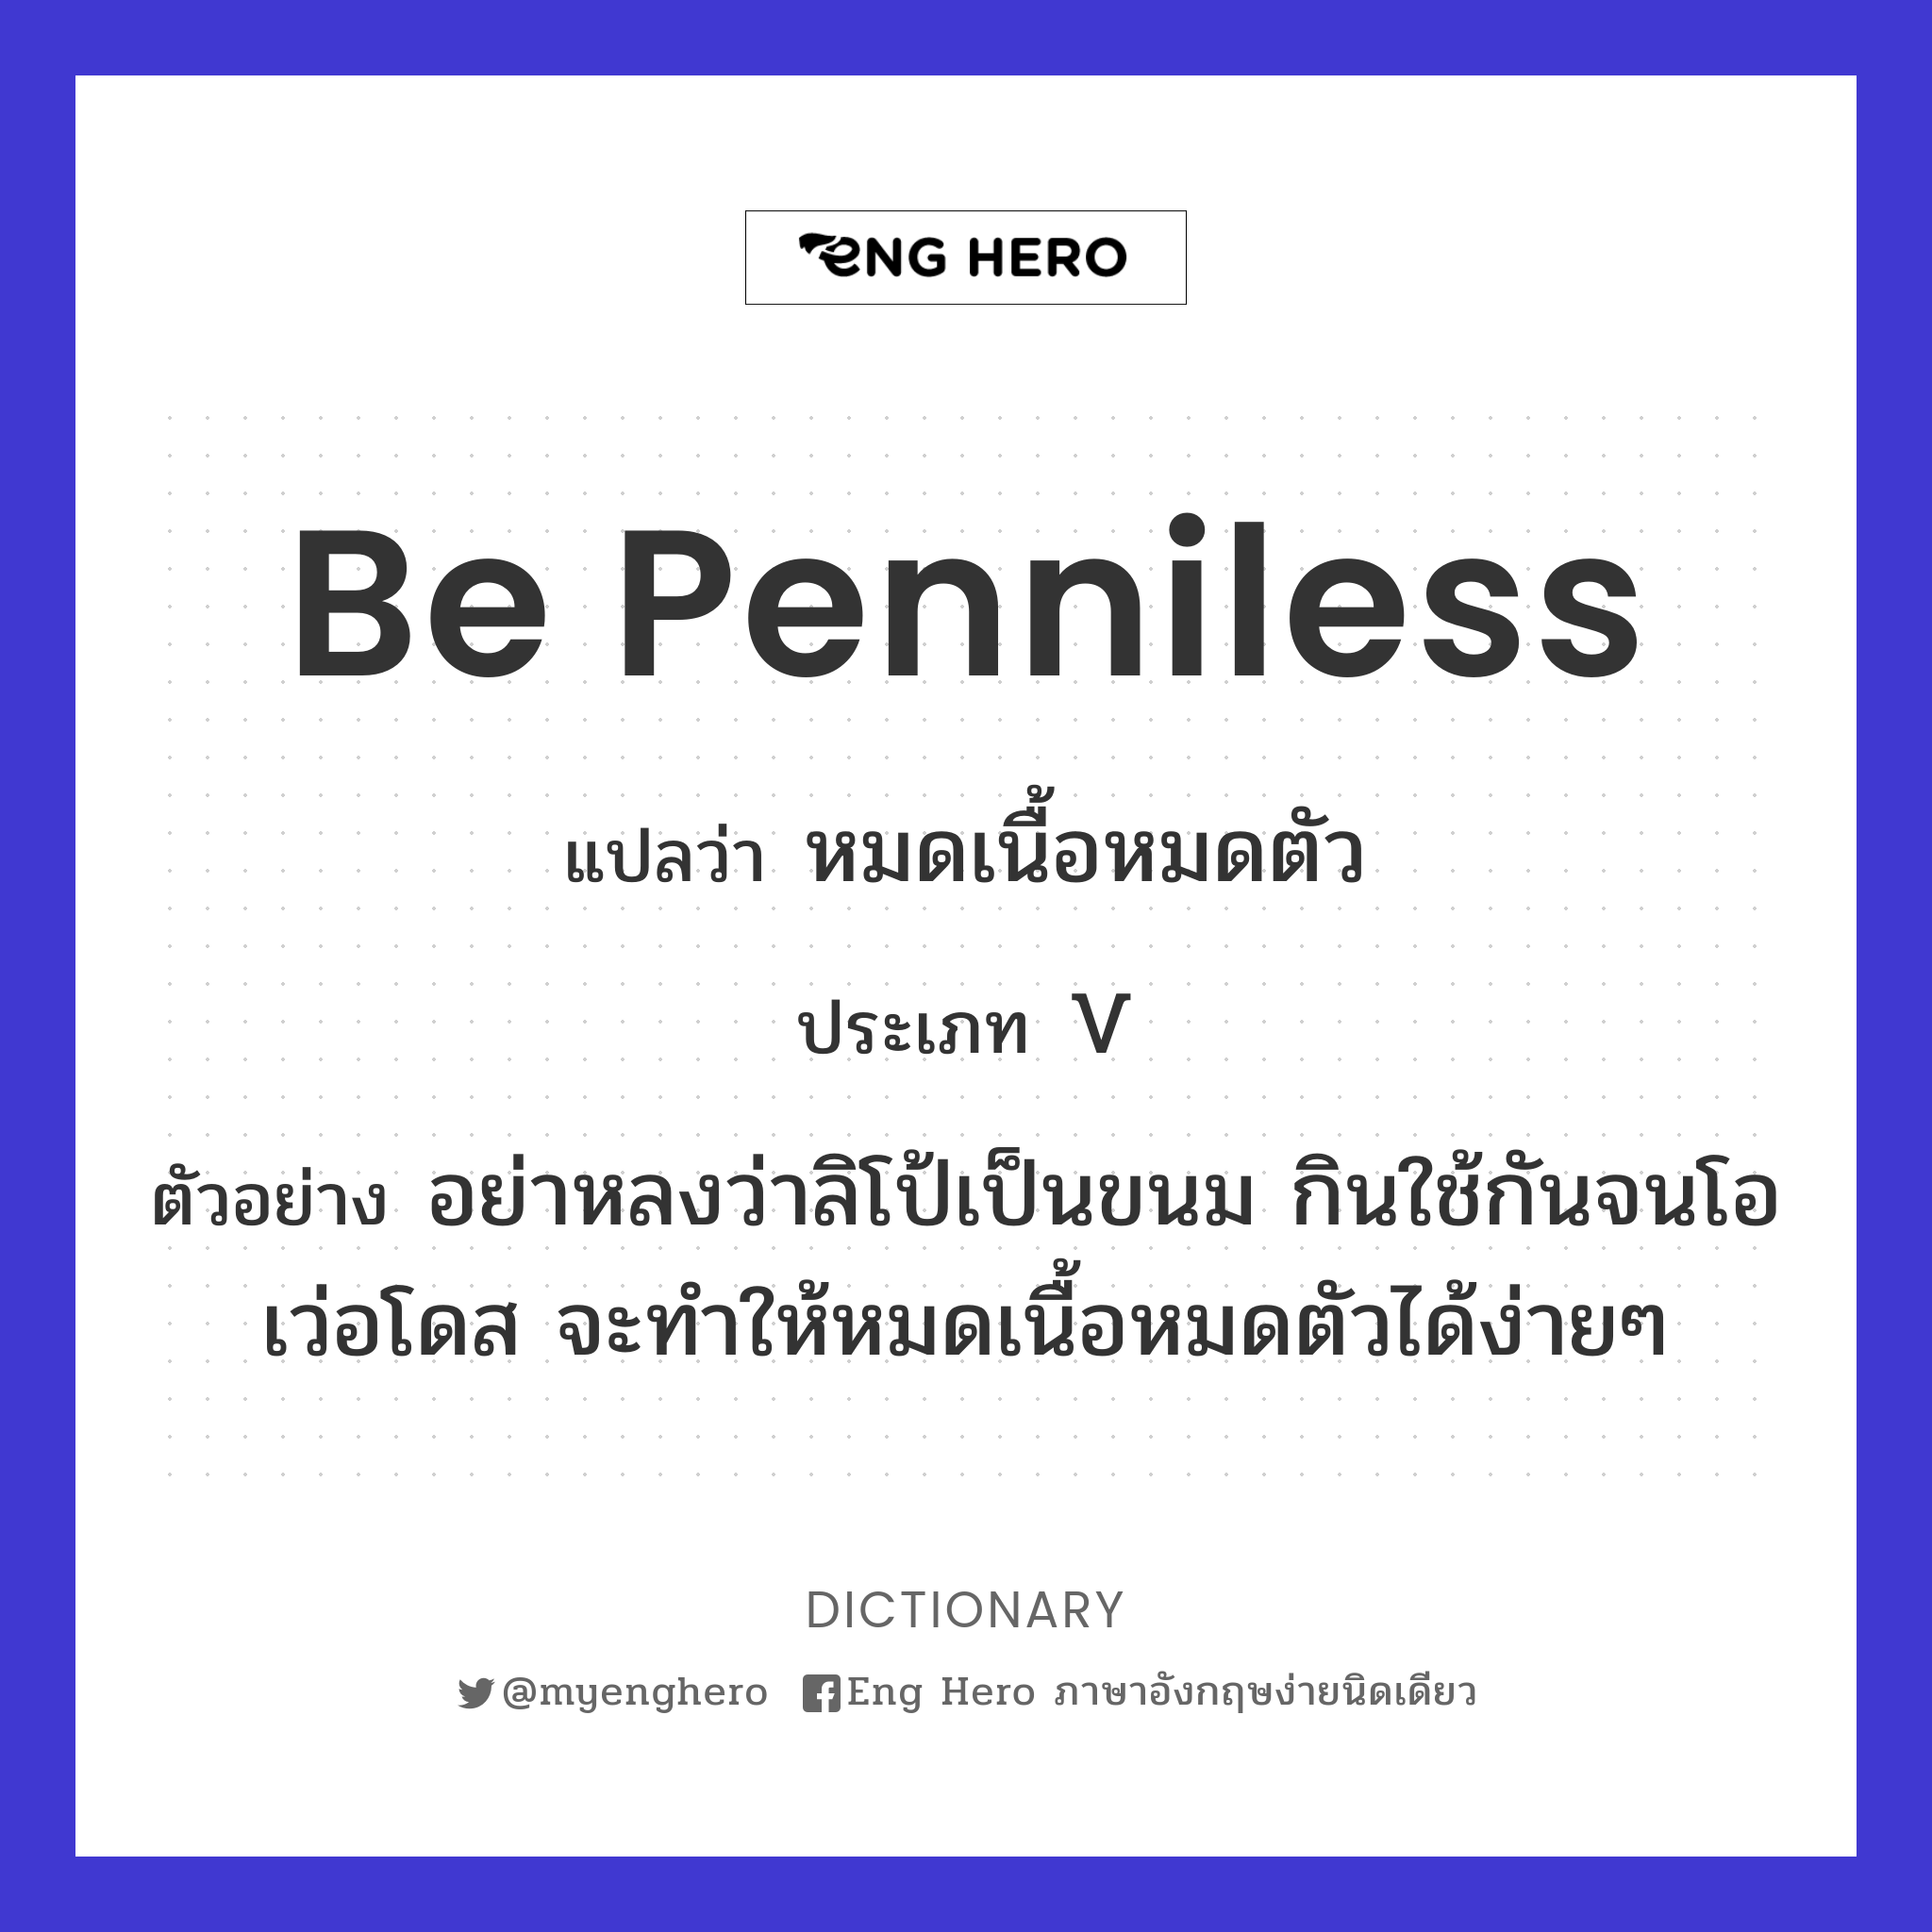 be penniless